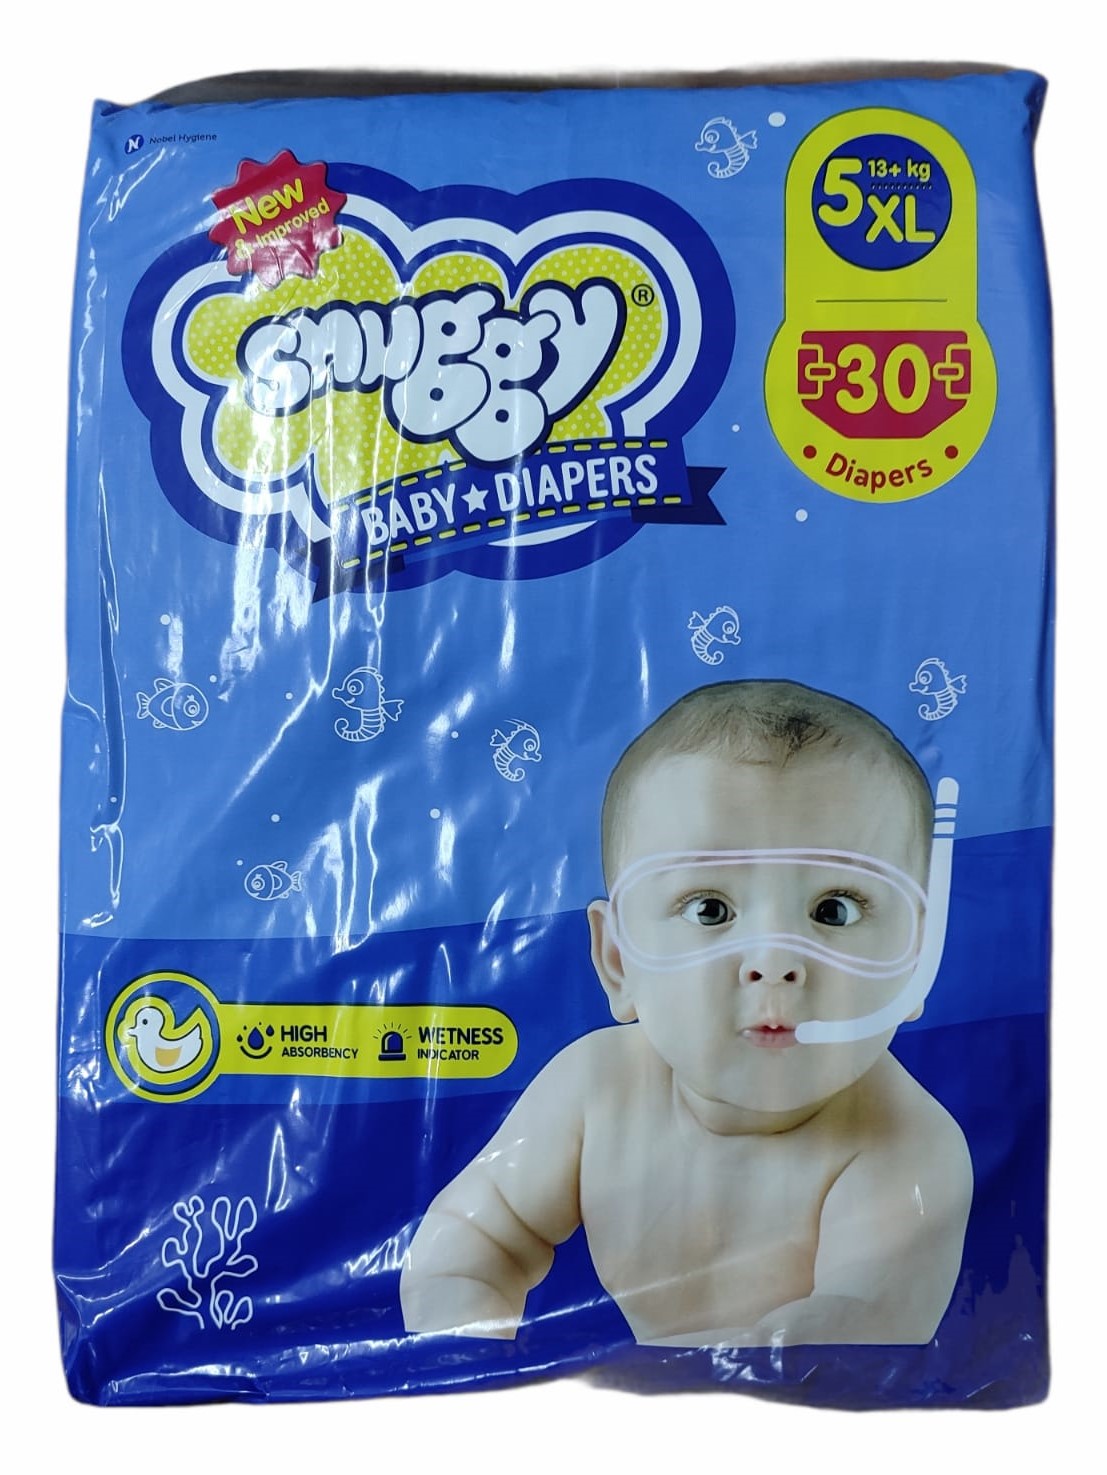 Snuggy Baby Diaper